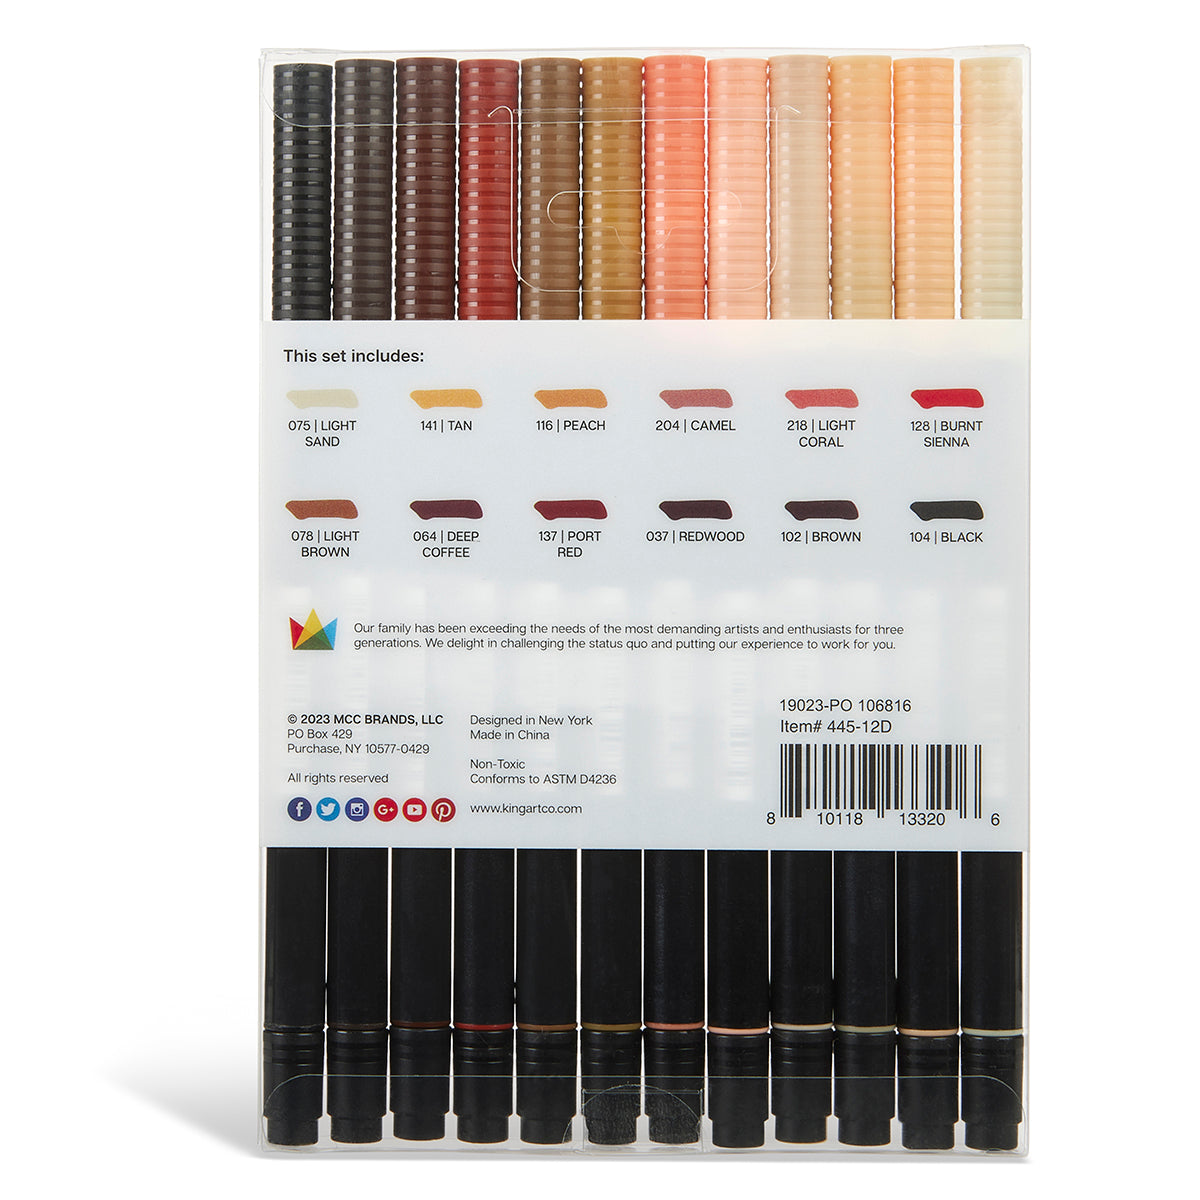 KINGART® PRO Twin-Tip™ 445 Series Brush Pen Art Markers, Set of 96 Unique &  Vivid Colors, KINGART